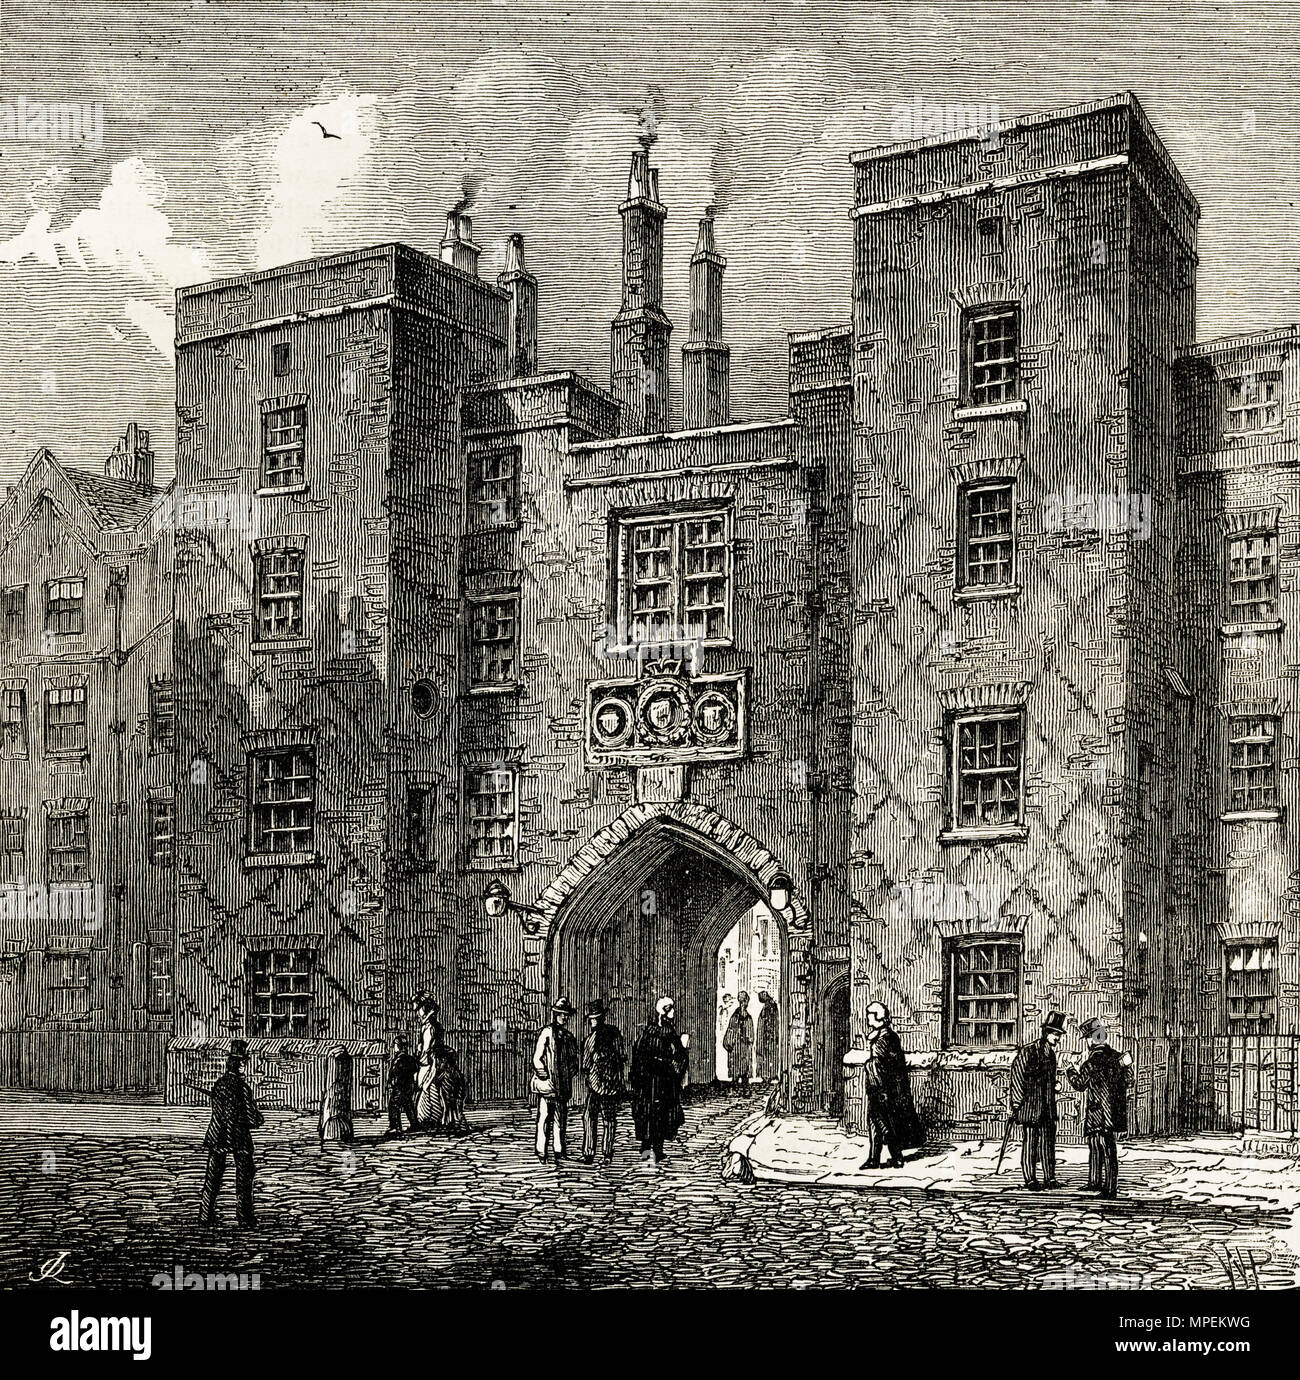 Lincoln's Inn Gate, Chancery Lane, London England UK. 19ème siècle gravure victorienne circa 1878 Banque D'Images